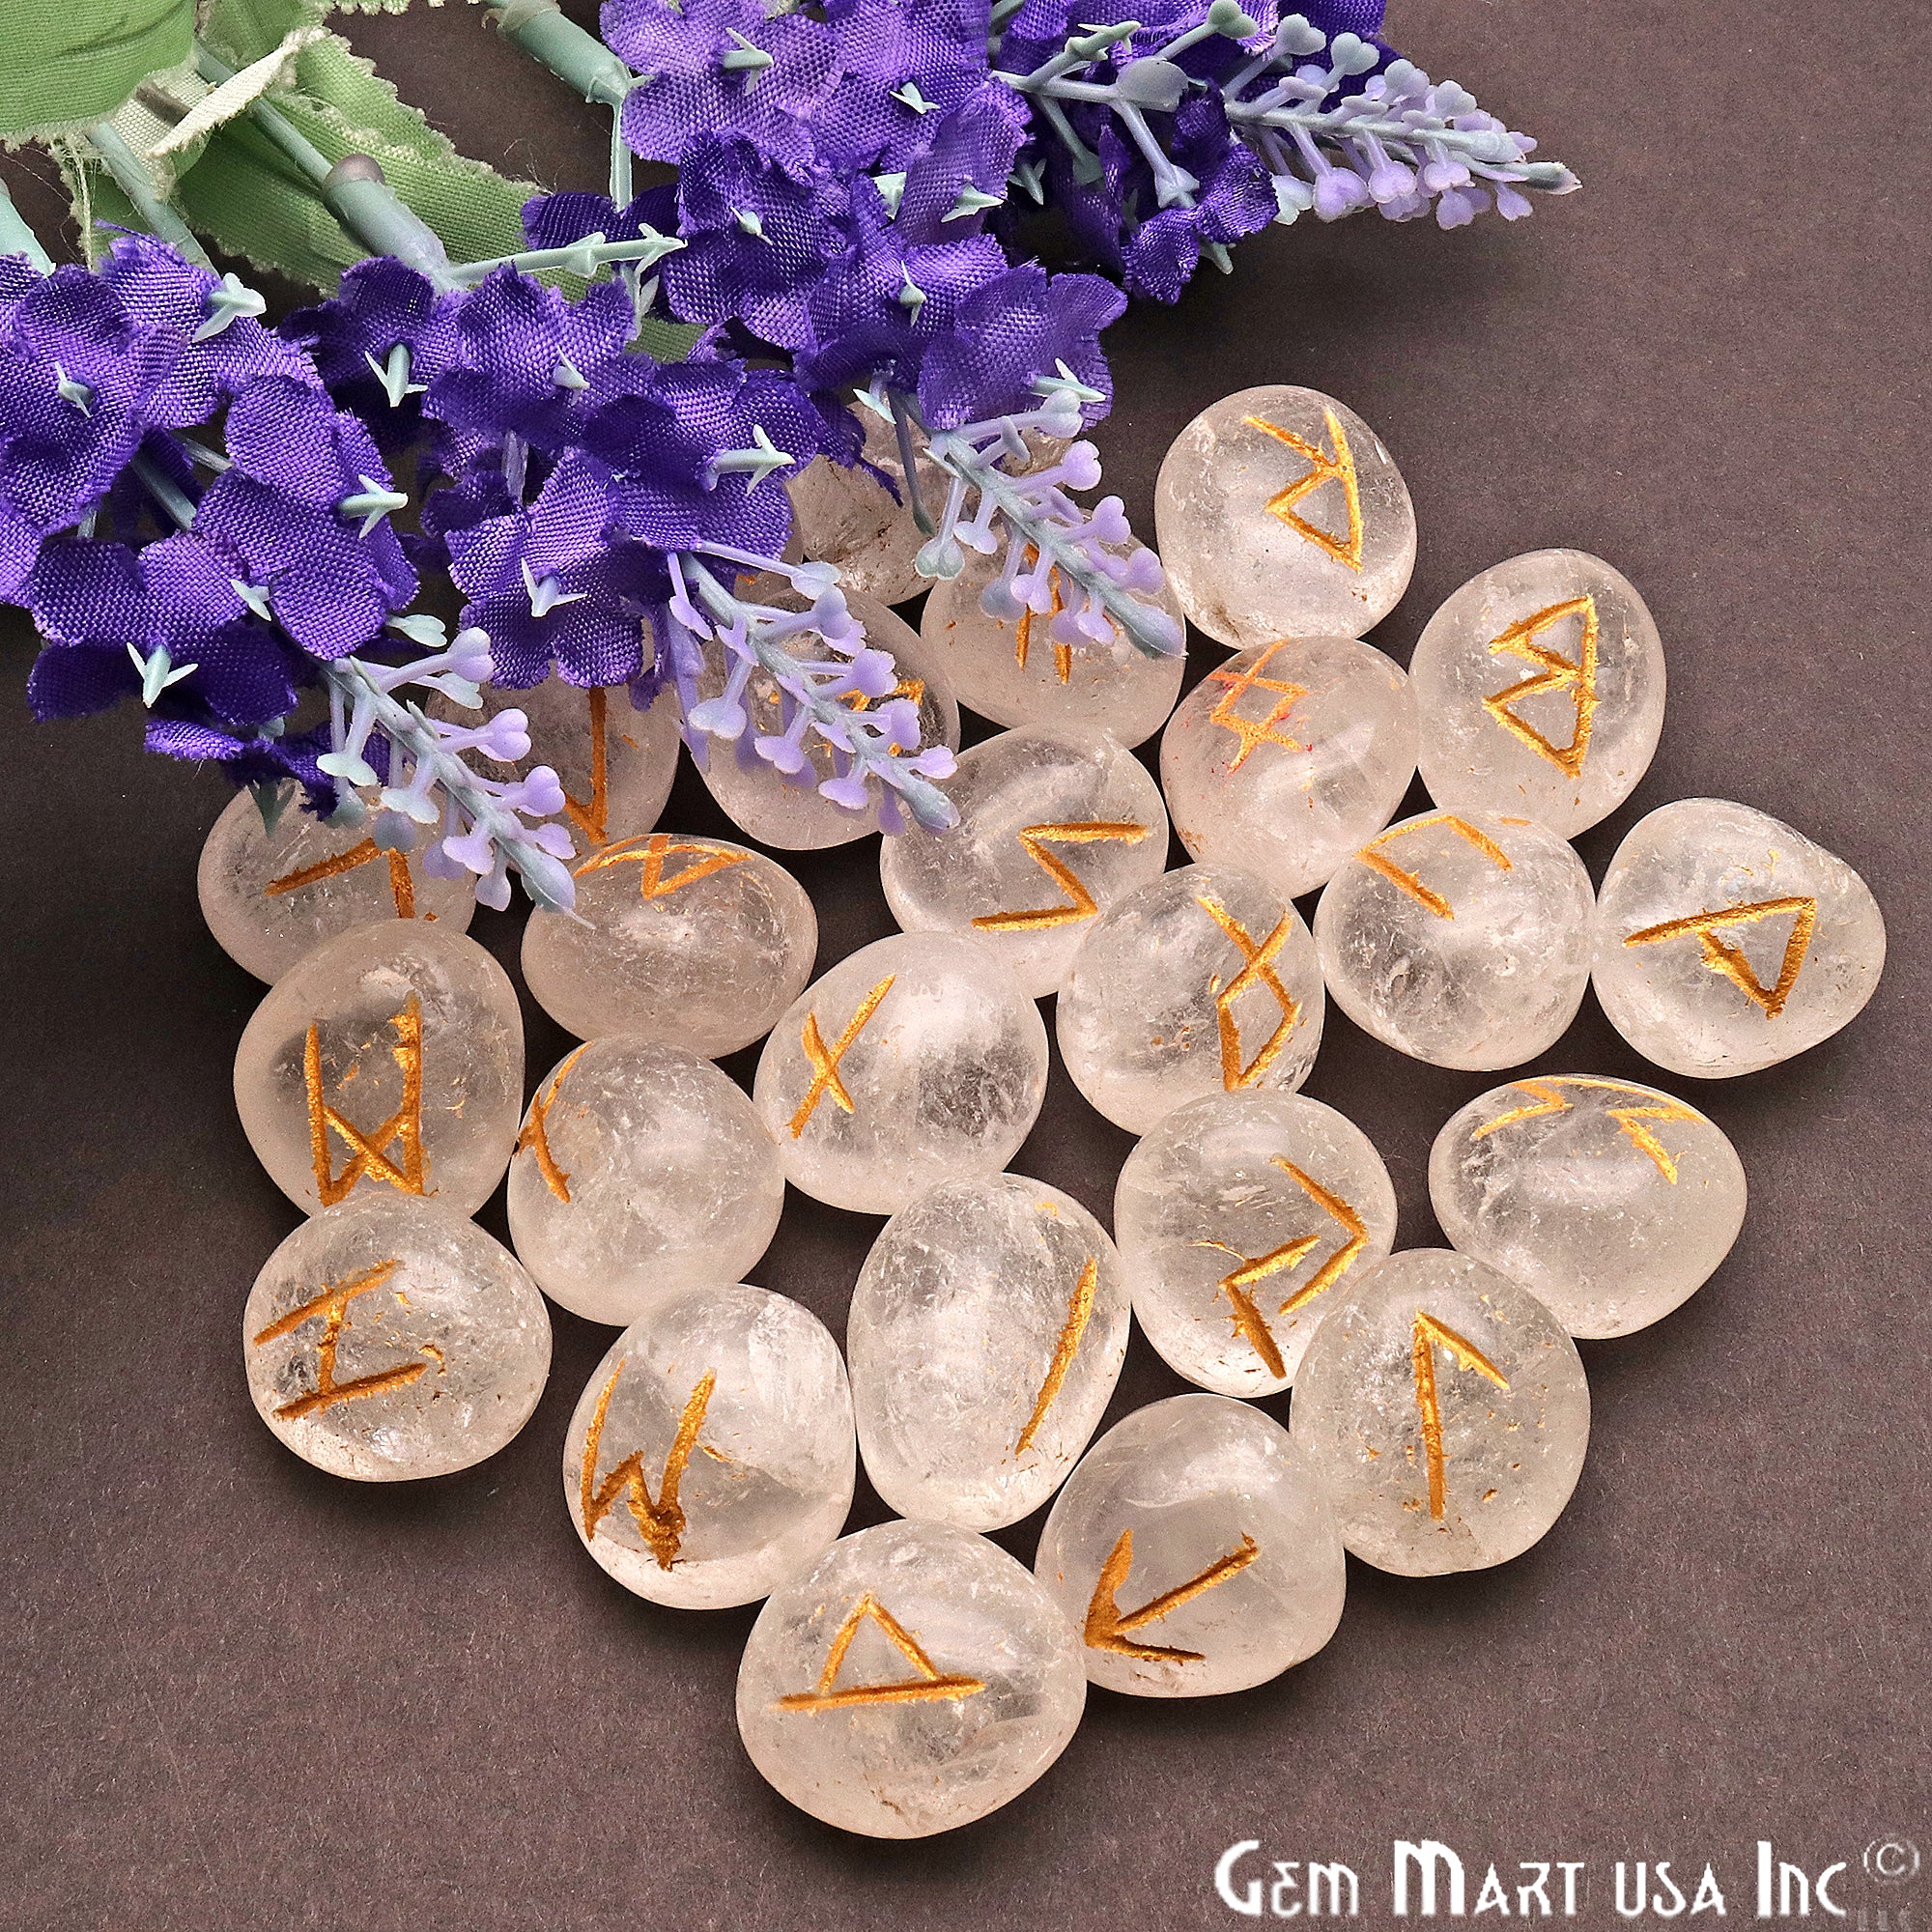 GEMMART USA Rune Stones ite Spiritual Futhark Reiki Symbols Gemstones  25PCS LOT